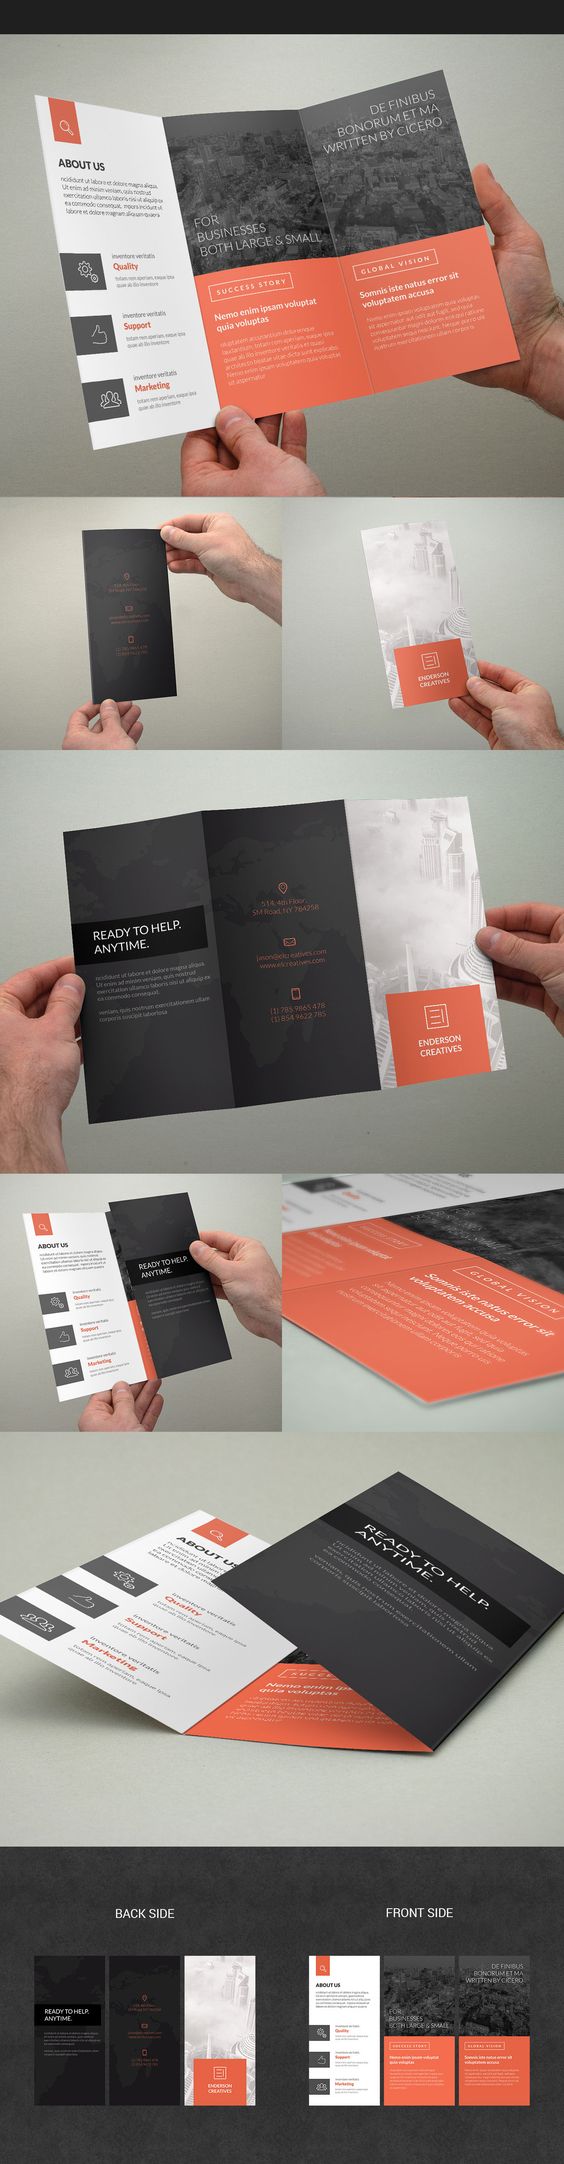 Tri fold brochure example